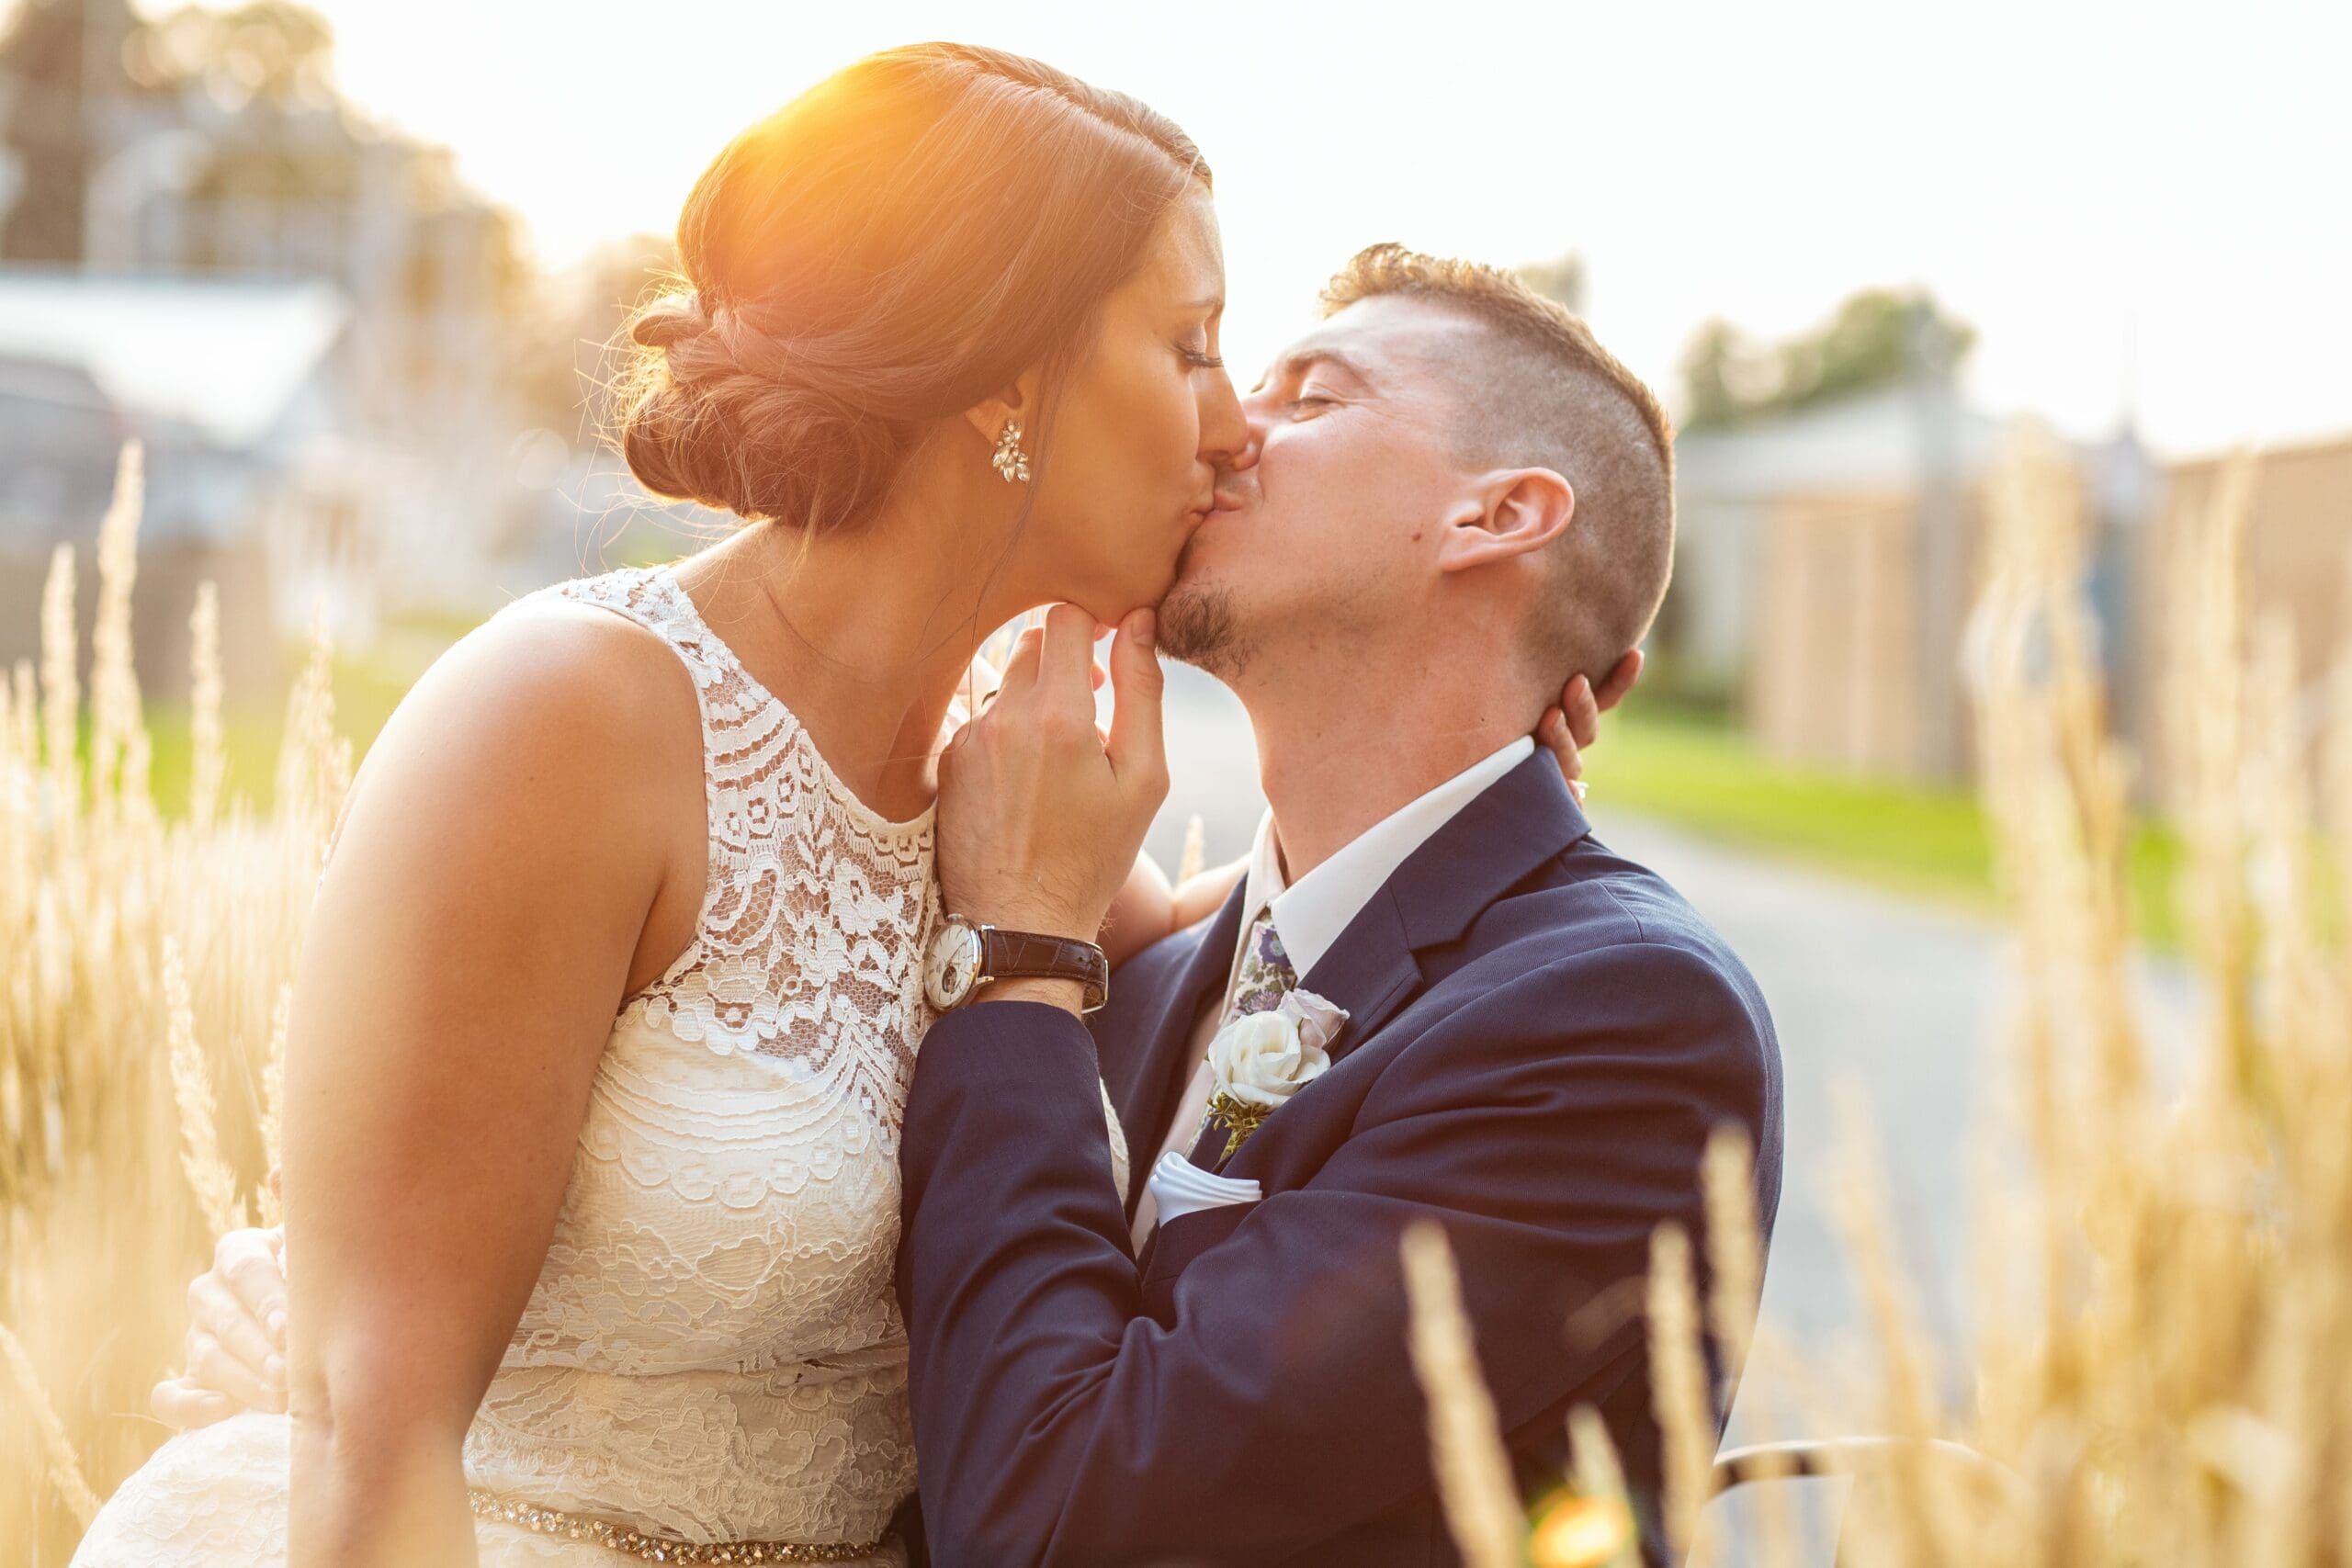 sunset kiss, wedding day, bride and groom, navy, lace wedding dress, diamond earrings, wedding bun, southern illinois photographer